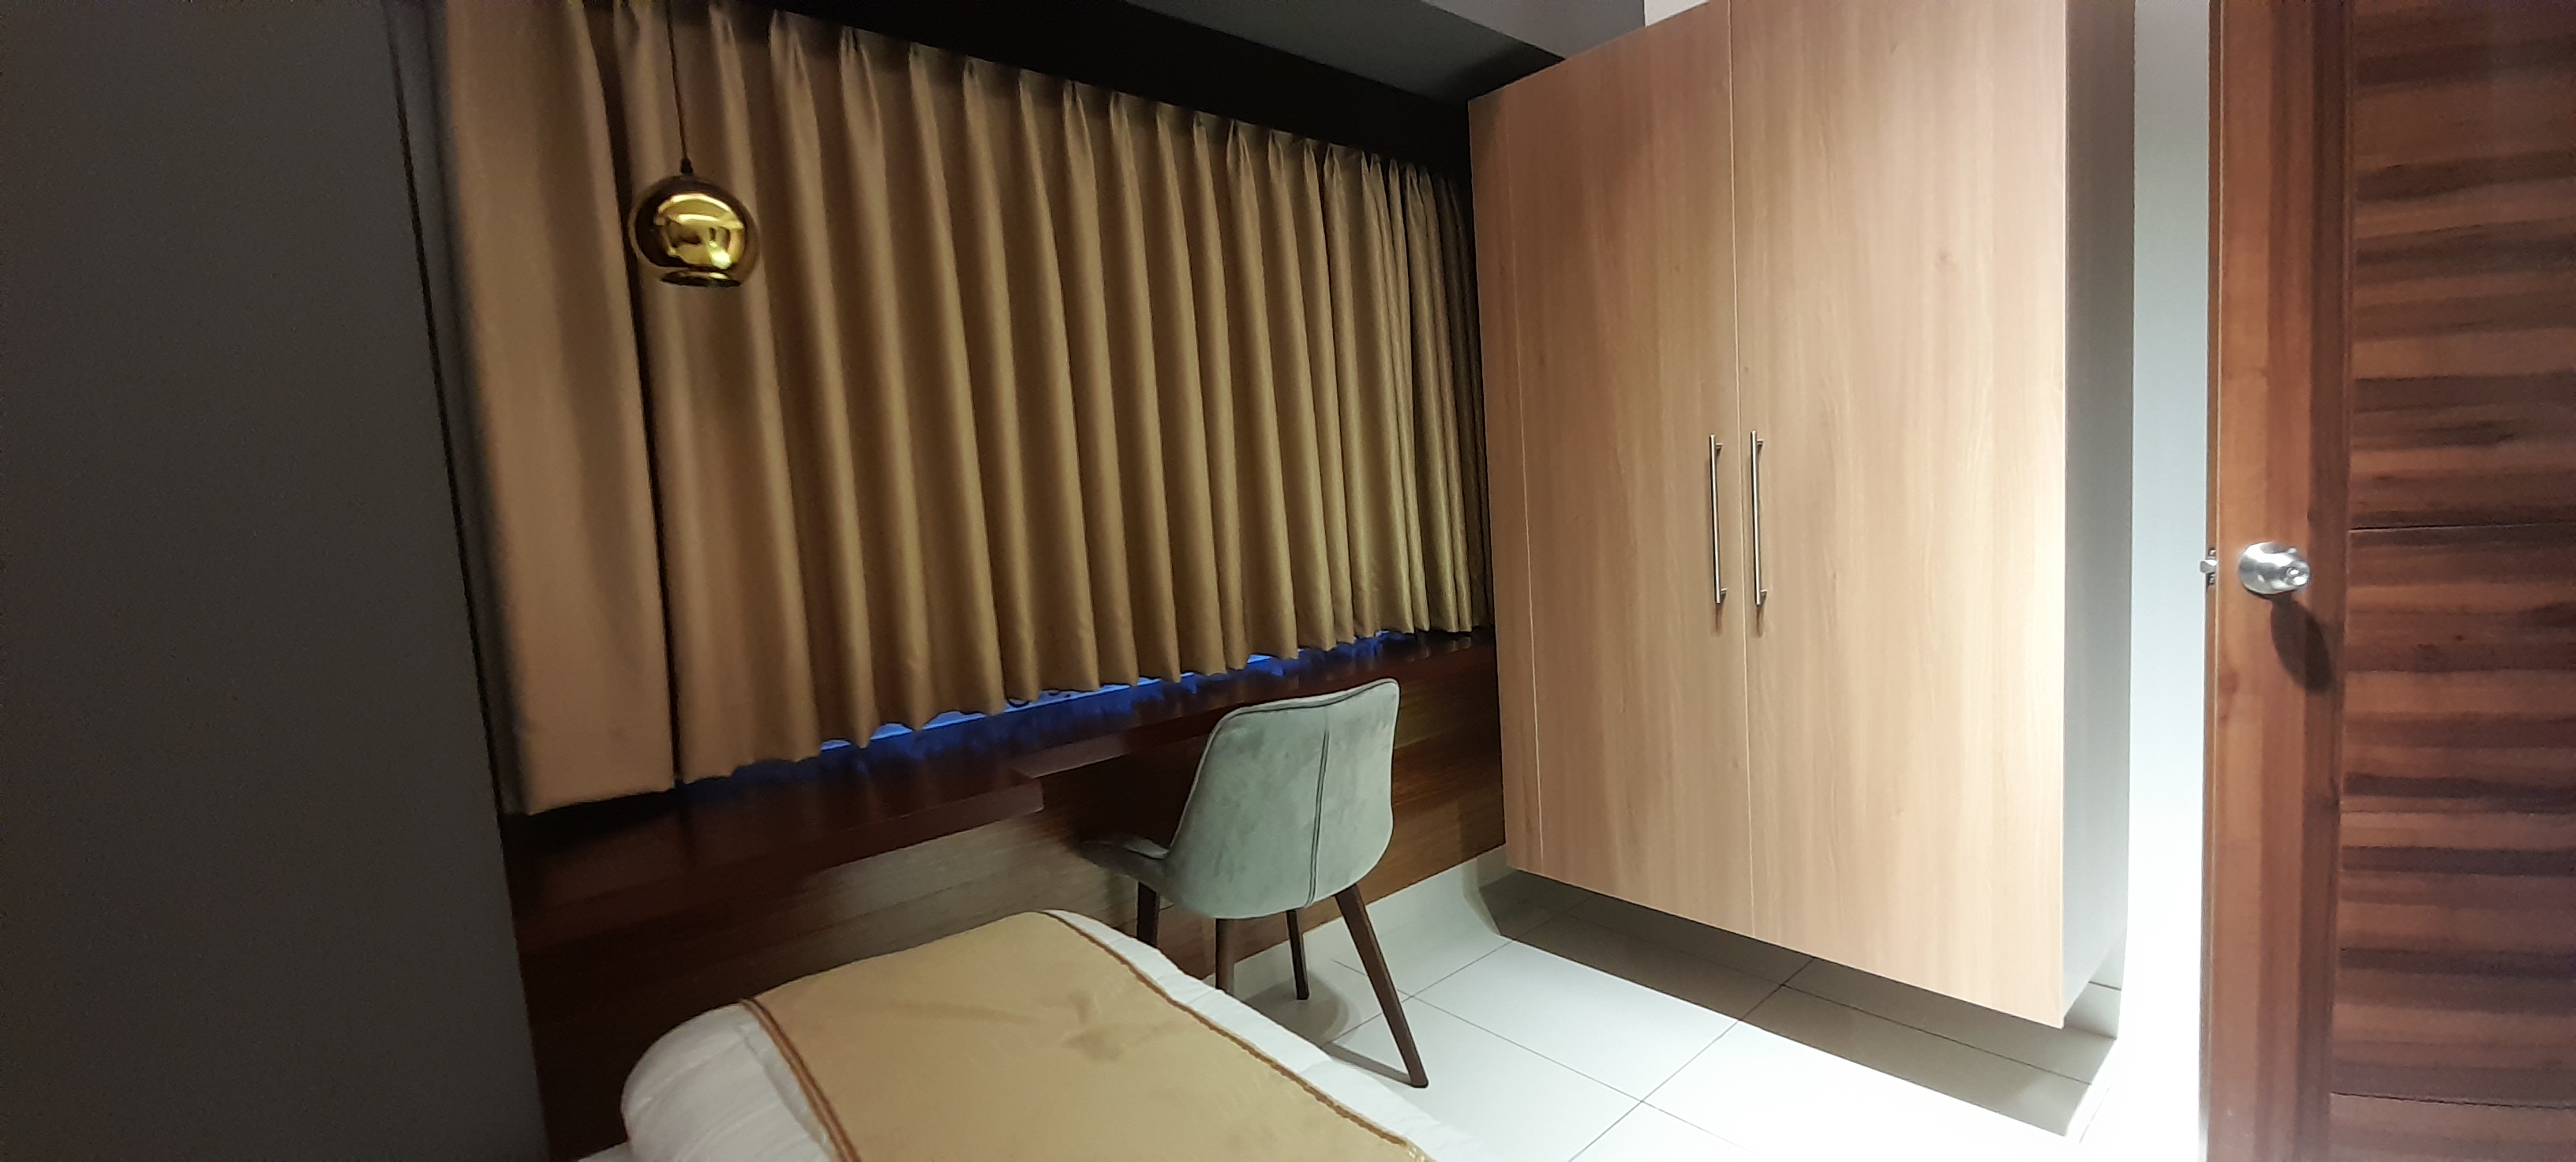 1-bedroom-fully-furnished-with-balcony-at-horizons-101-cebu-city